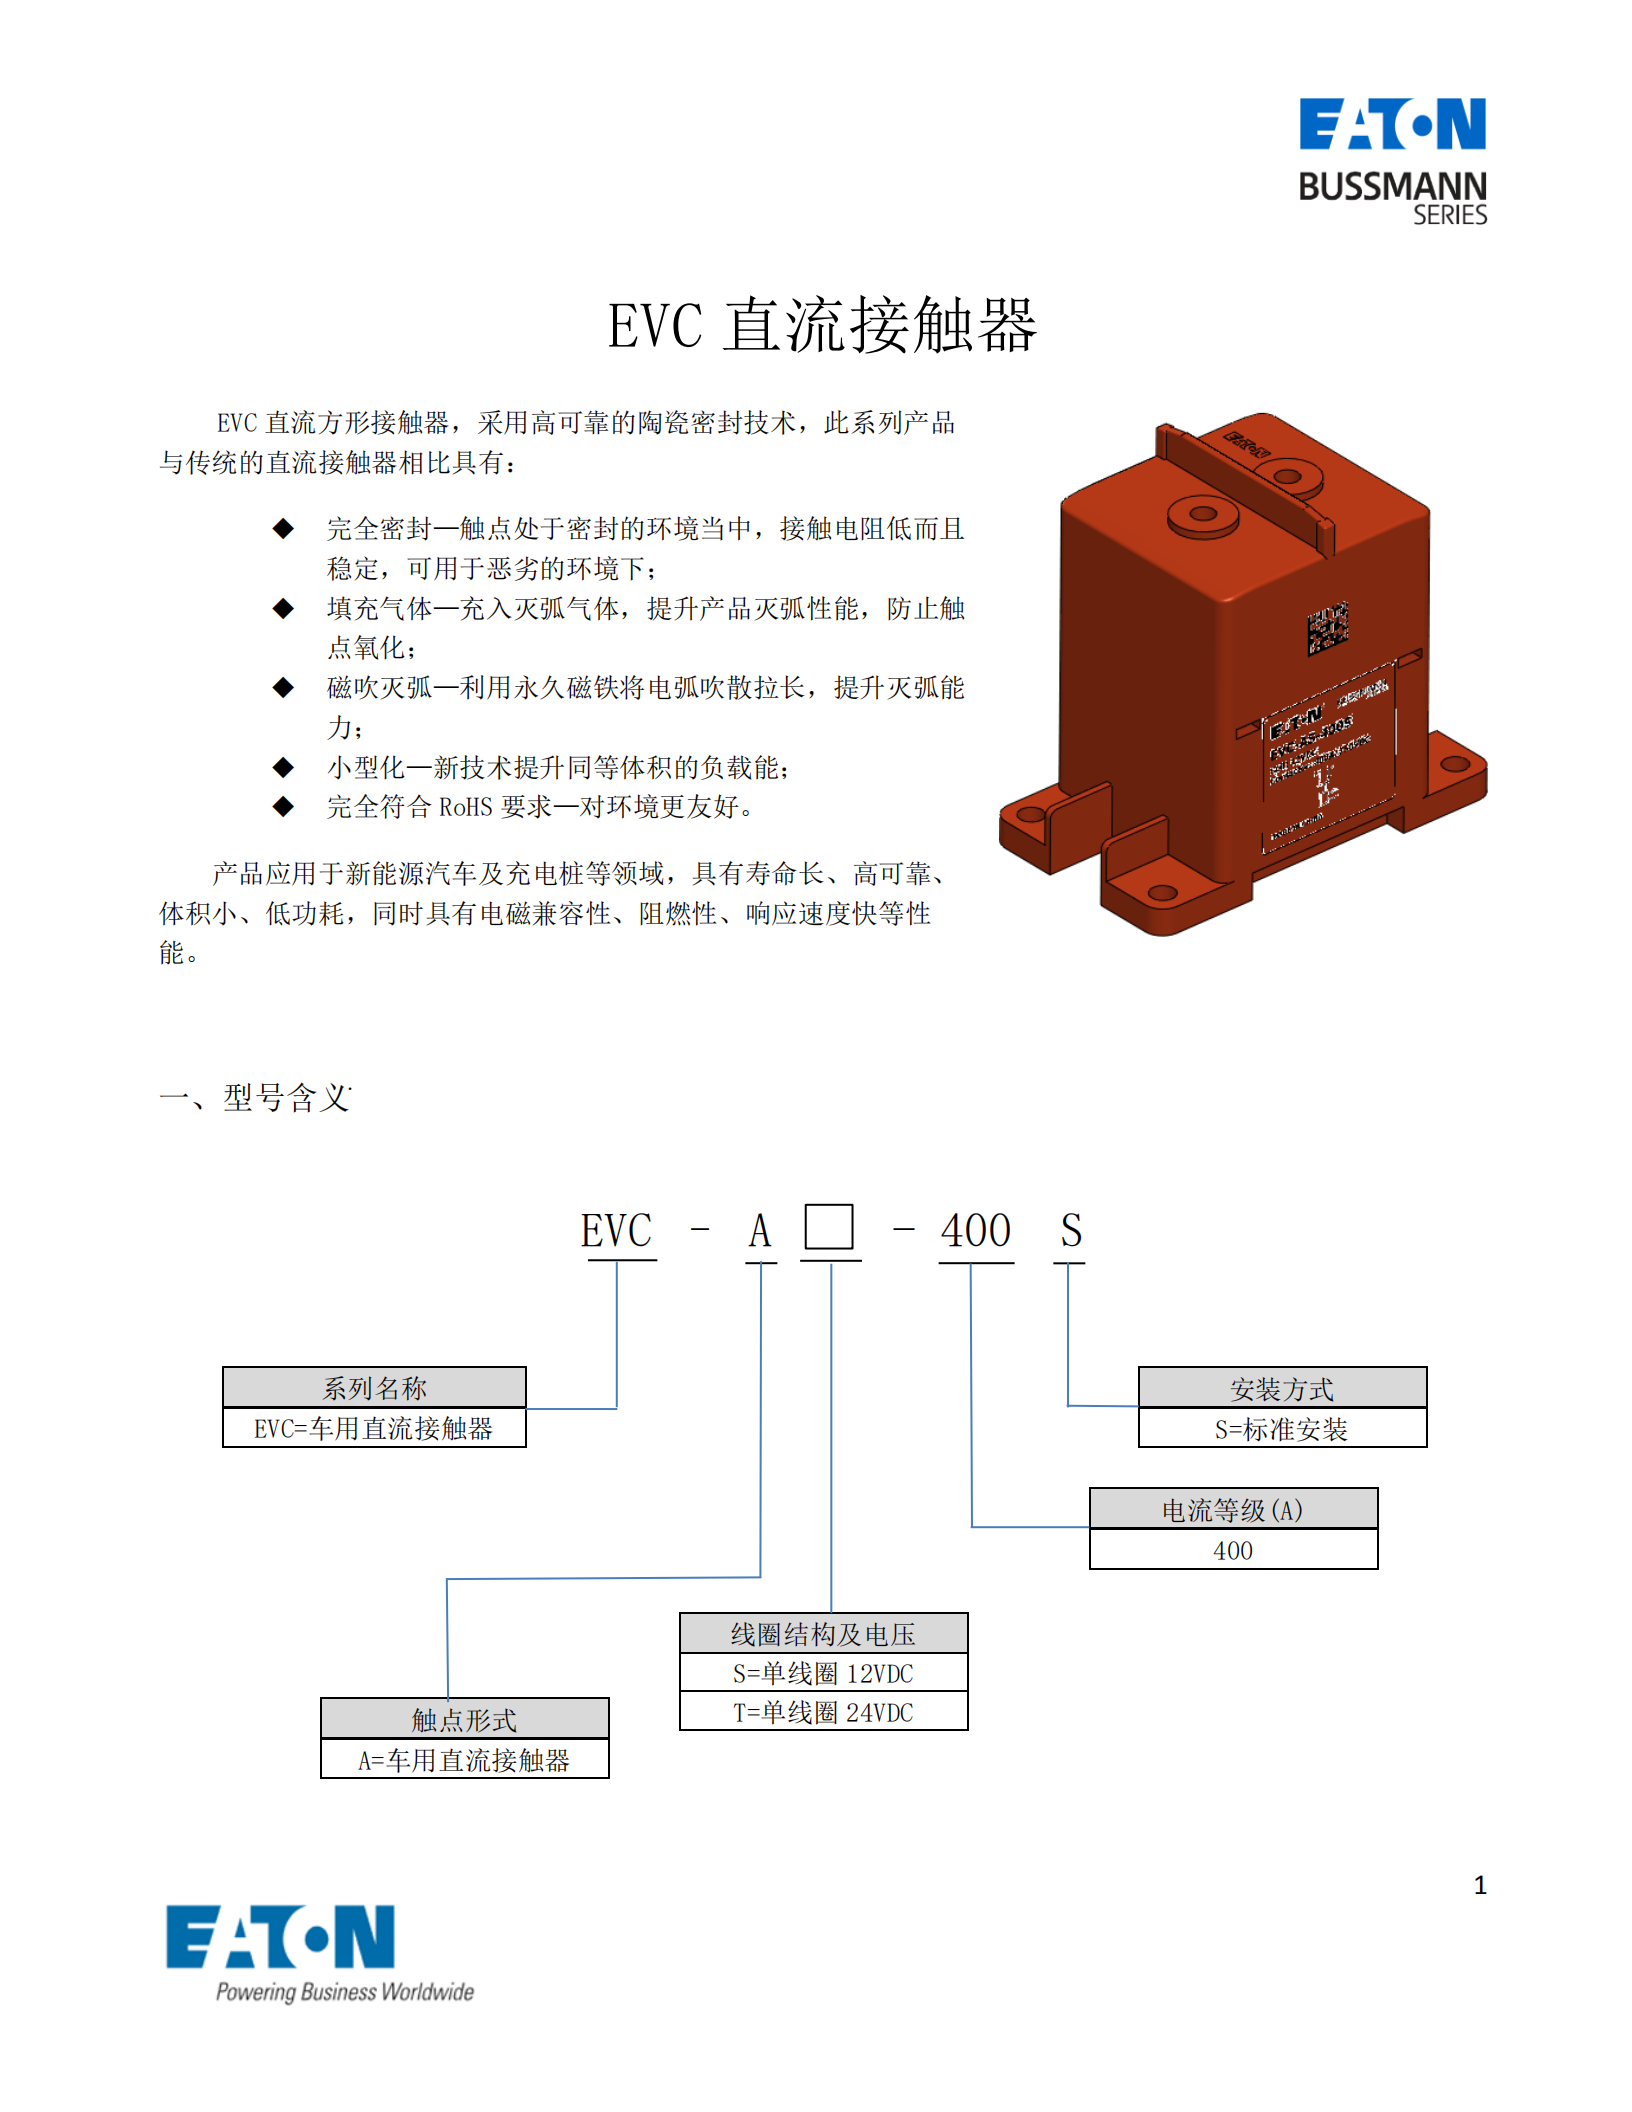 EVC-AS-400S直流接触器型号含义